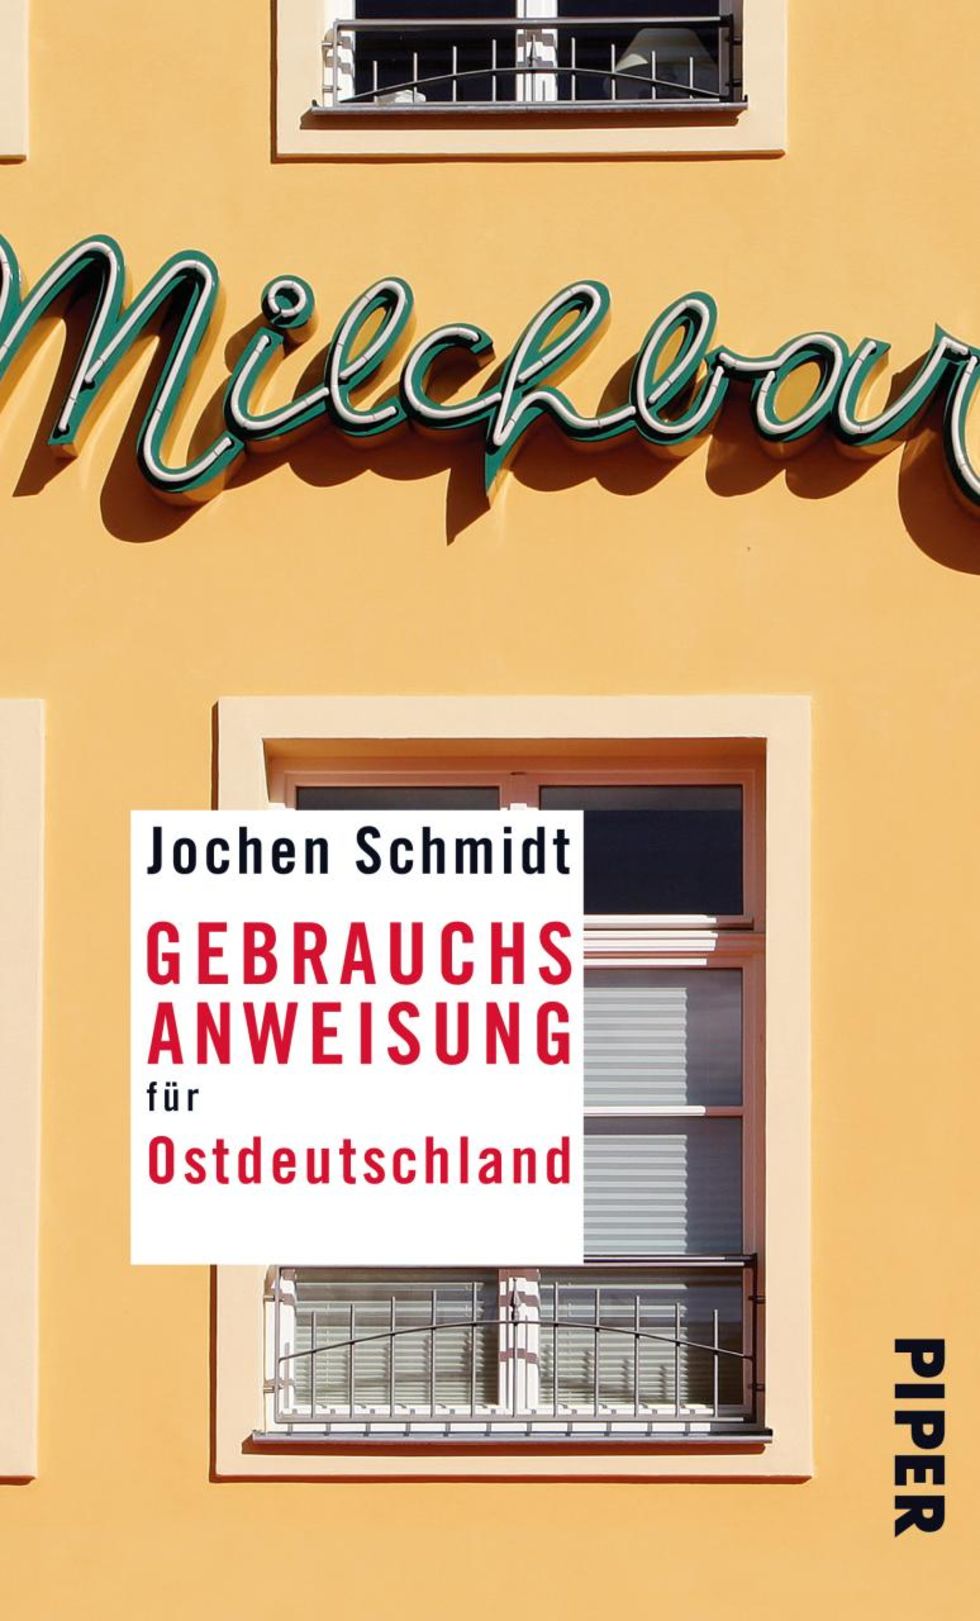 25-10-23 Jochen Schmidt Buchcover